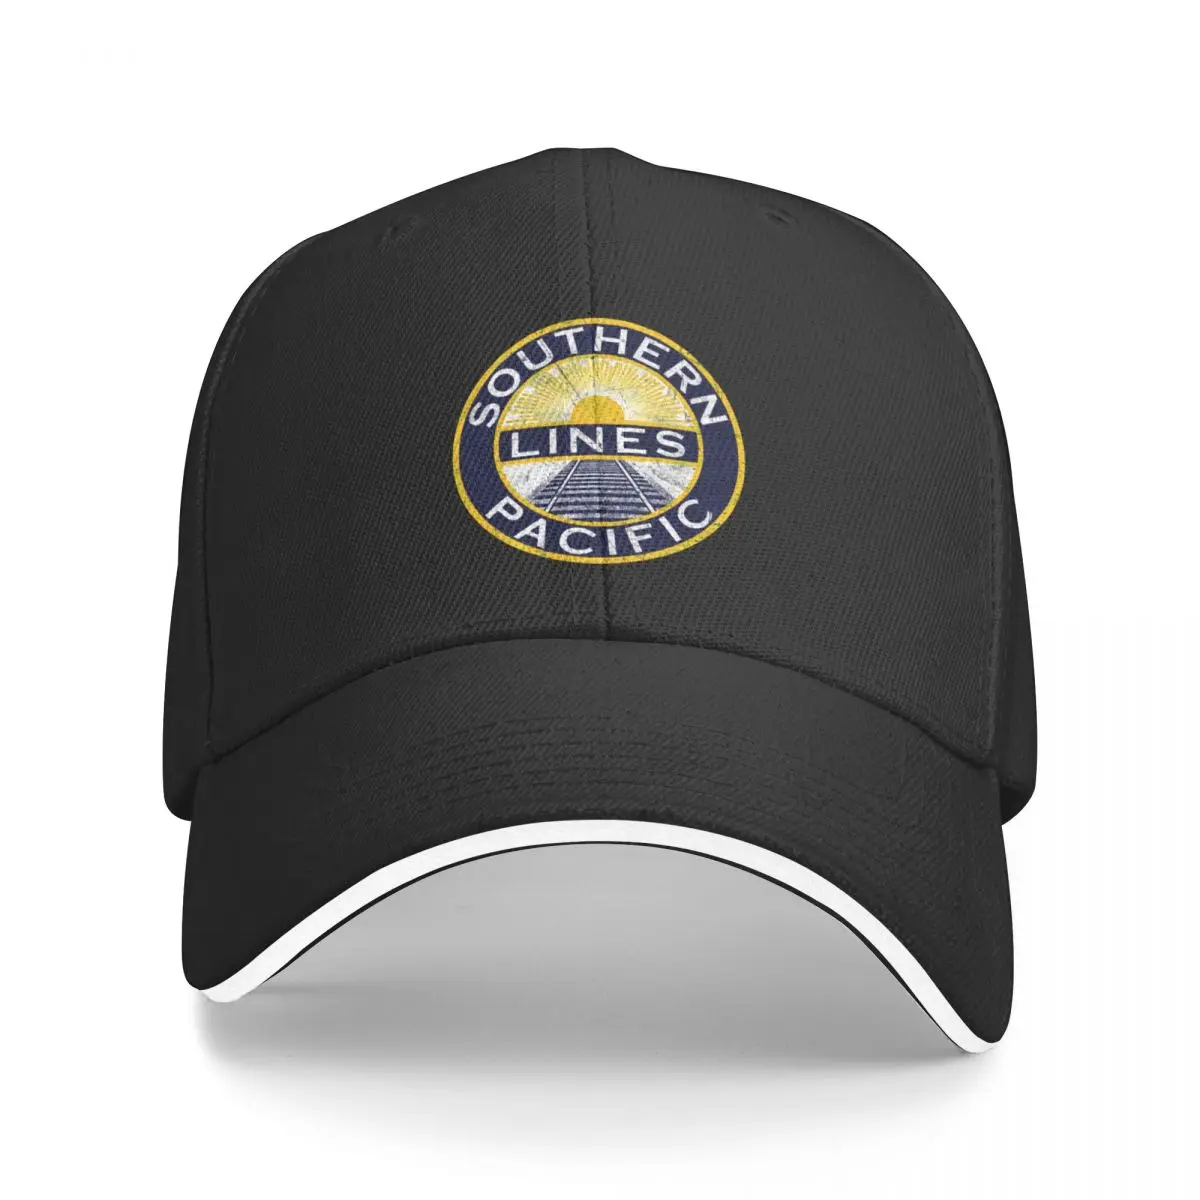 

New Vintage Historic Railway Southern Pacific Baseball Cap black Horse Hat Gentleman Hat Caps For Women Men's